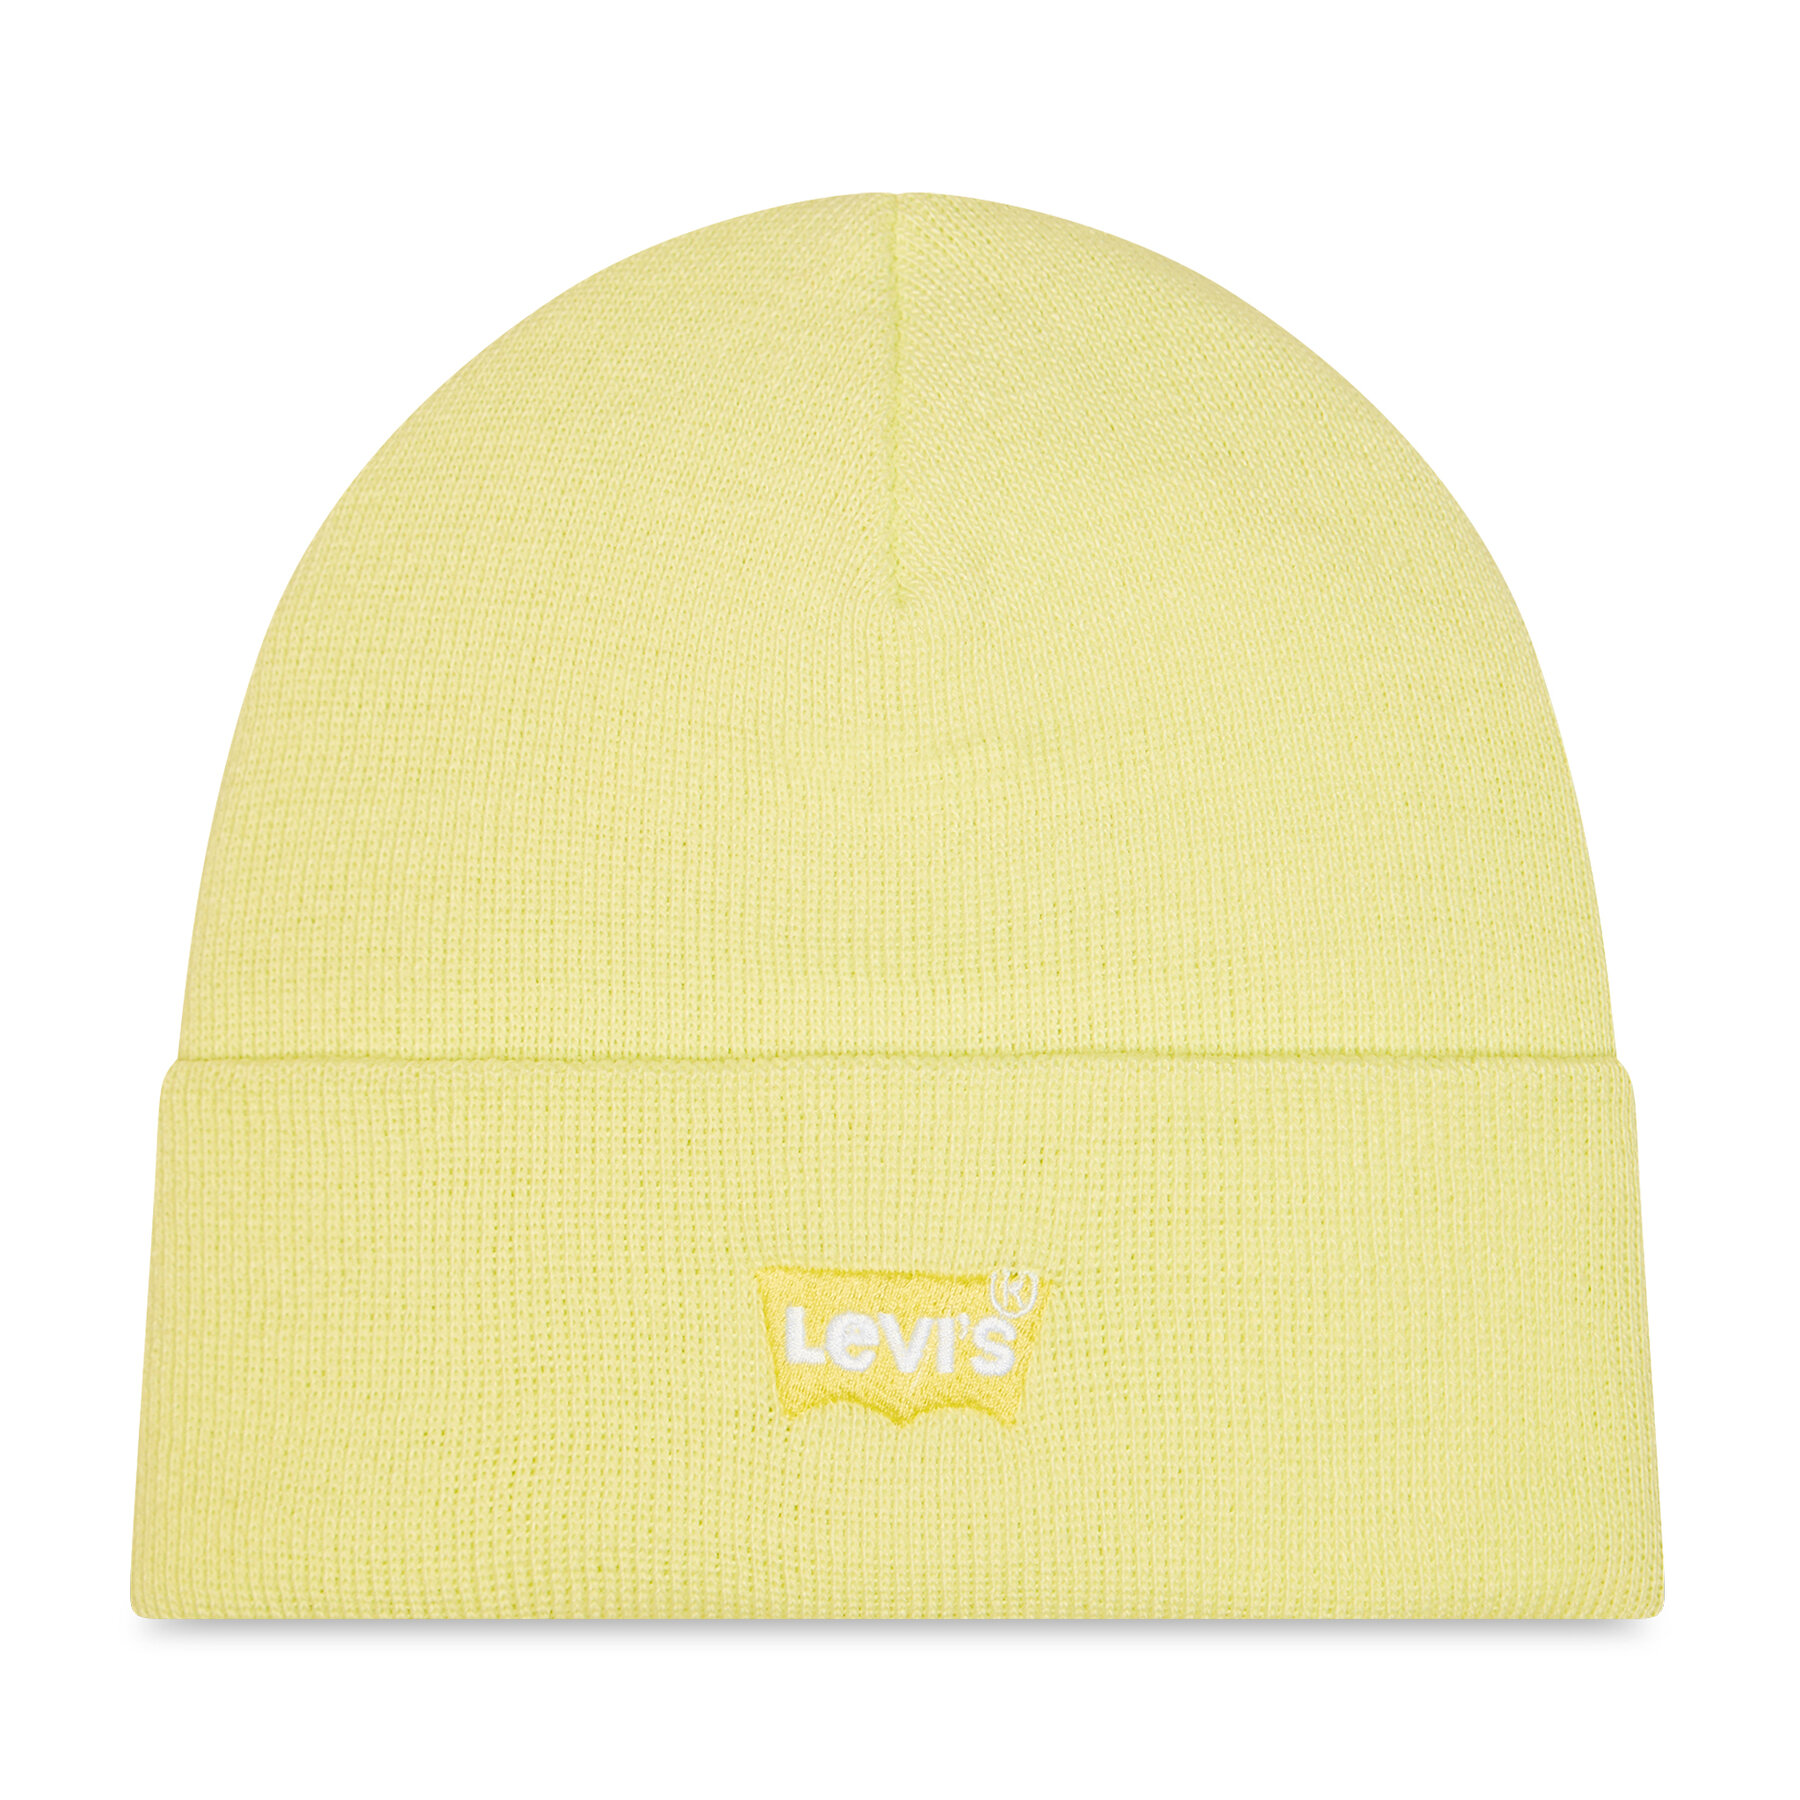 Levi's Tonal Batwing Slouchy Cap yellow